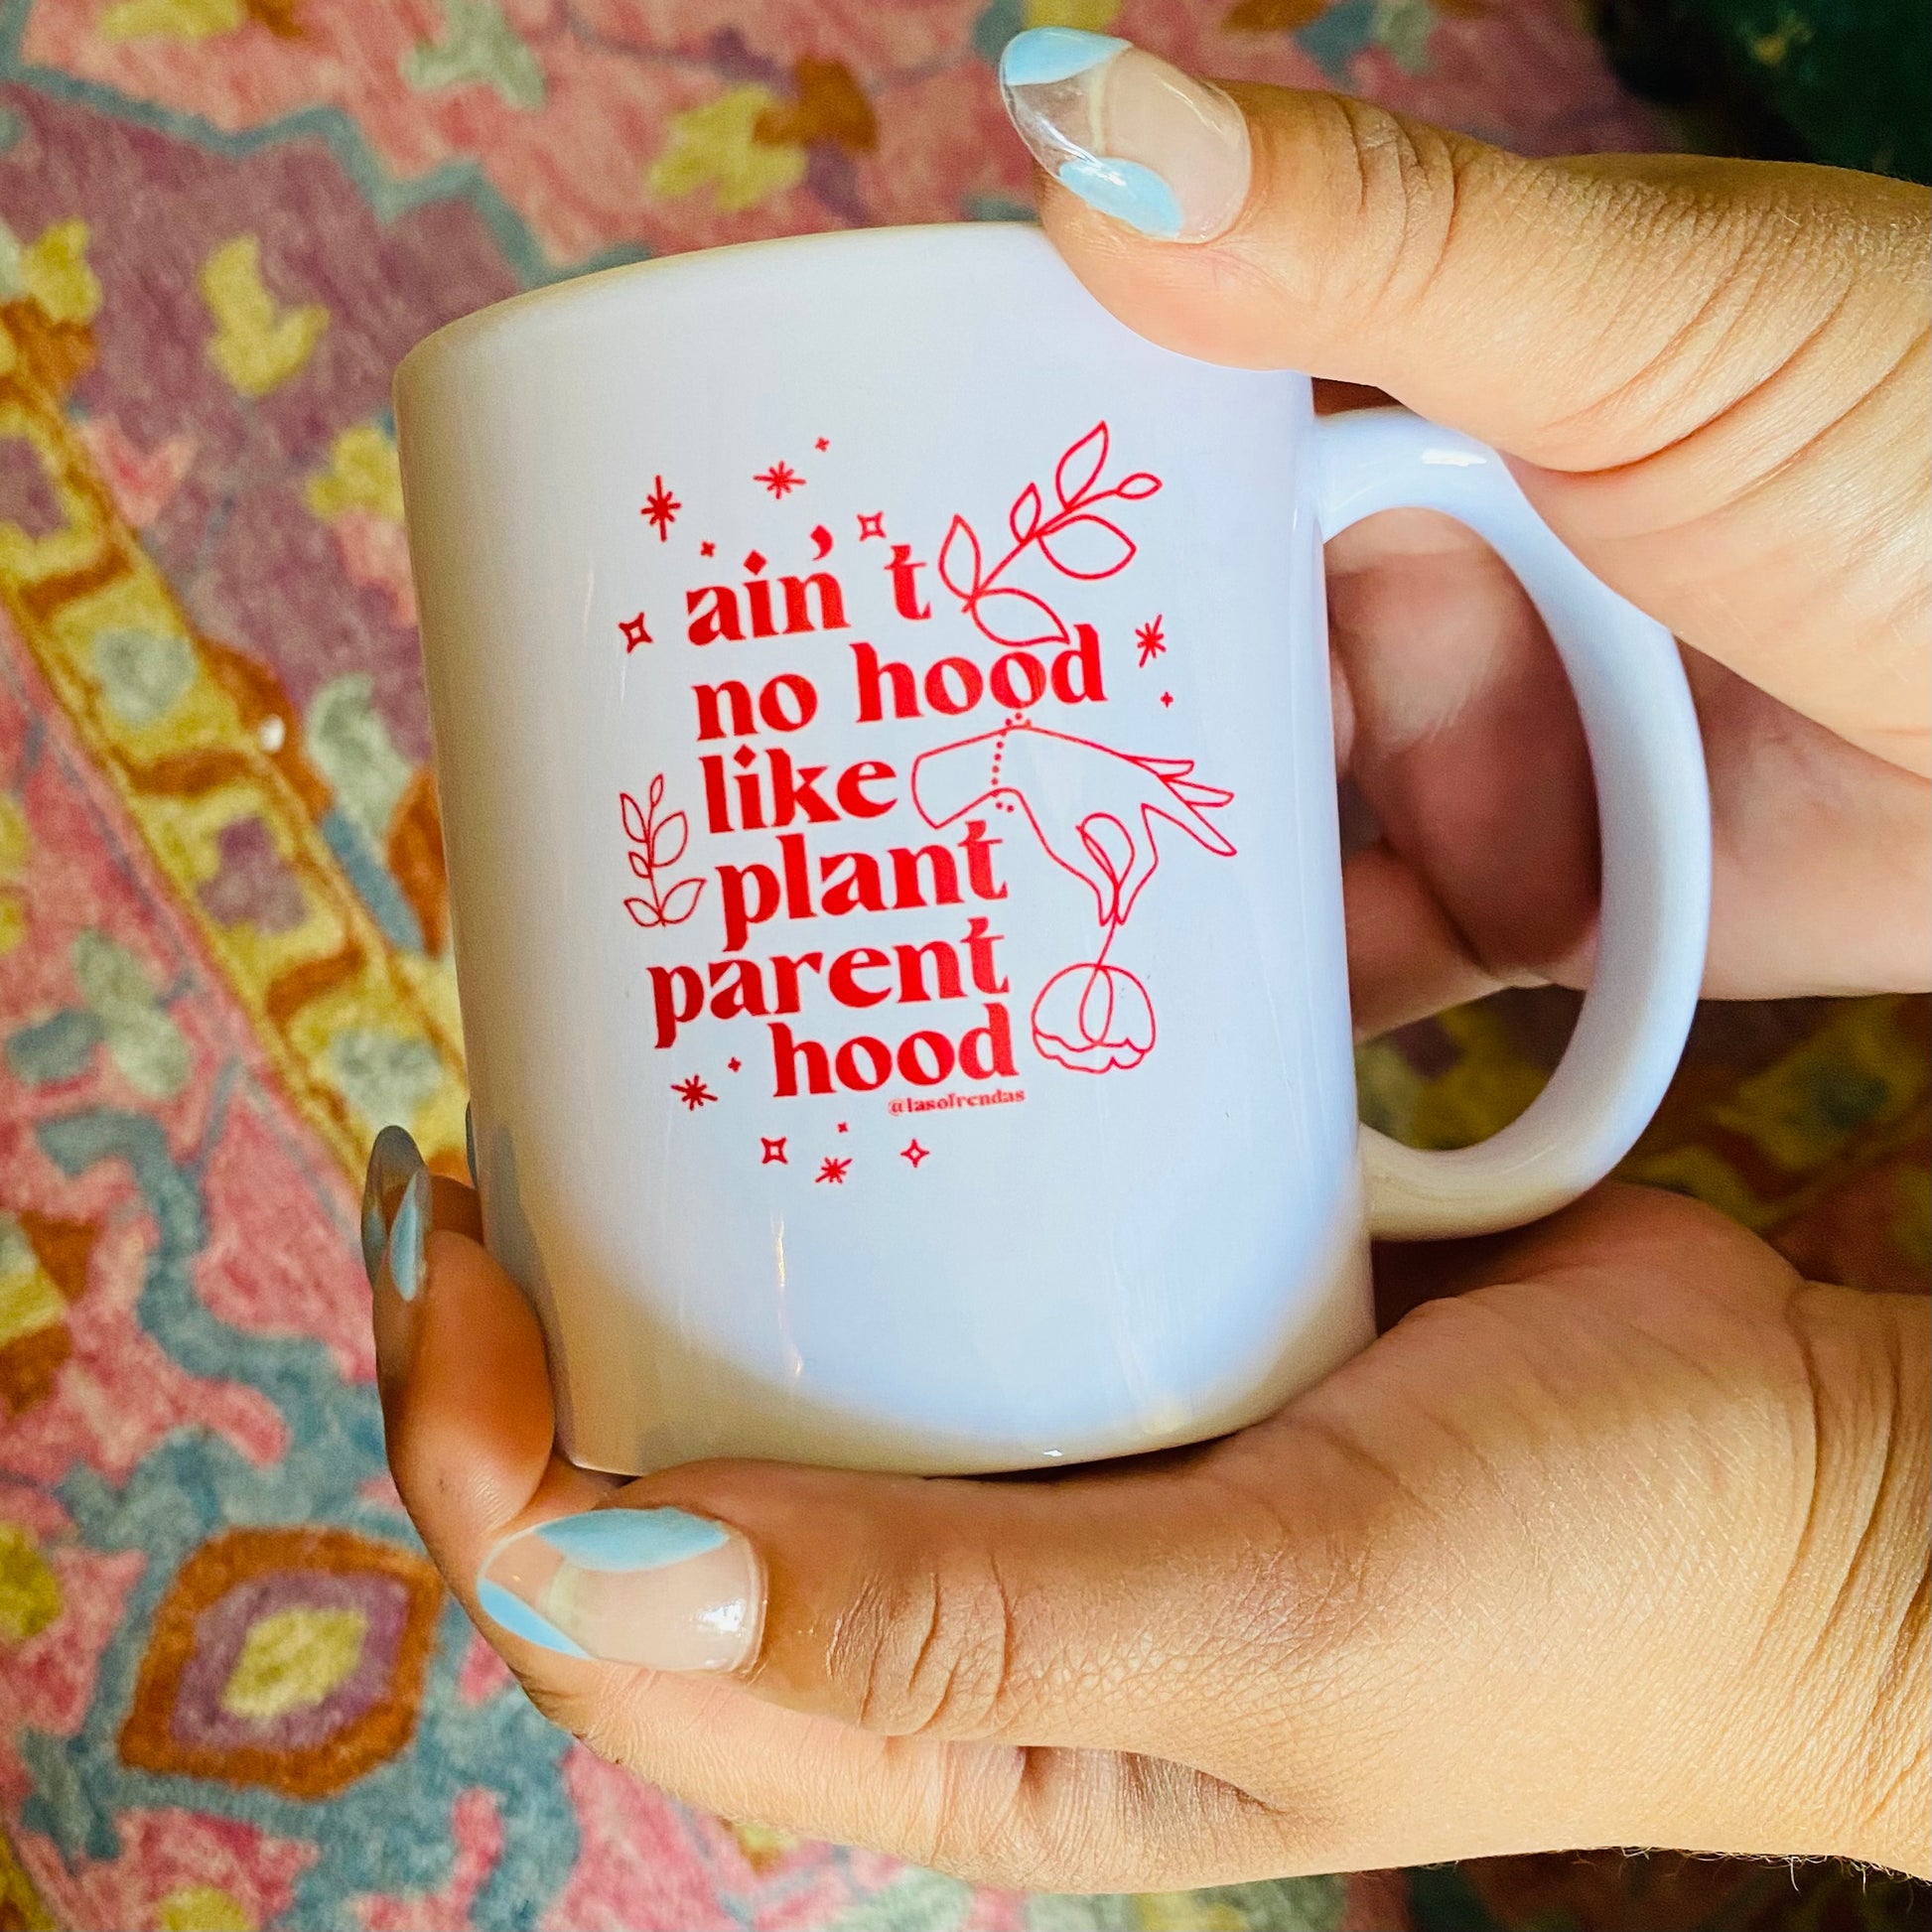 Ain't no hood like plant parenthood coffee tea anytime mug - Las Ofrendas 